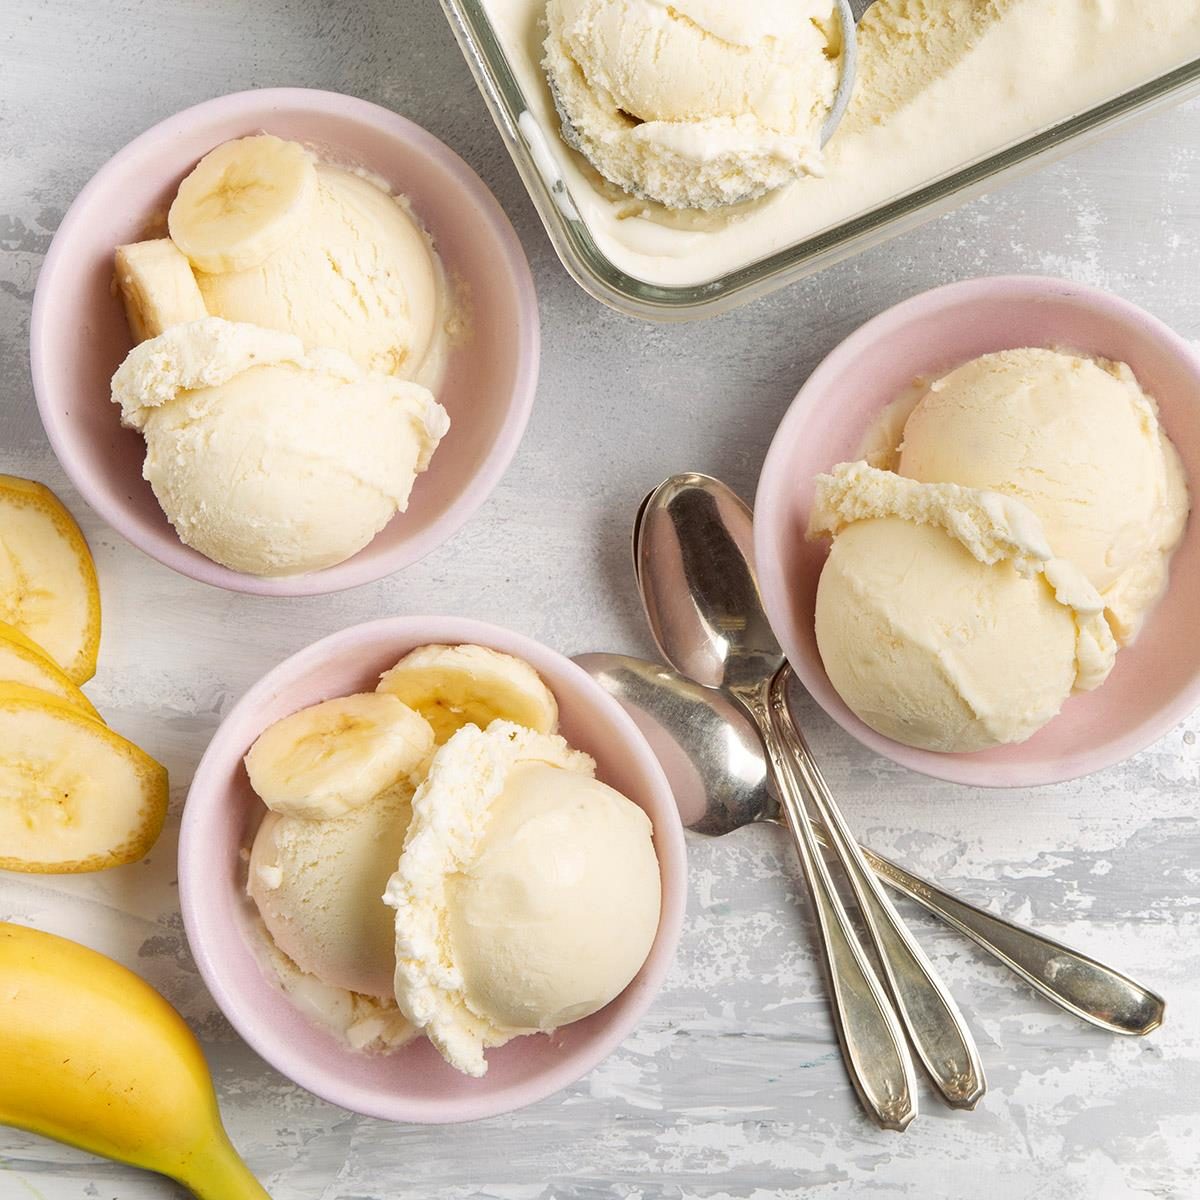 How To Make Homemade No Cook Banana Ice Cream With An Ice Cream Maker